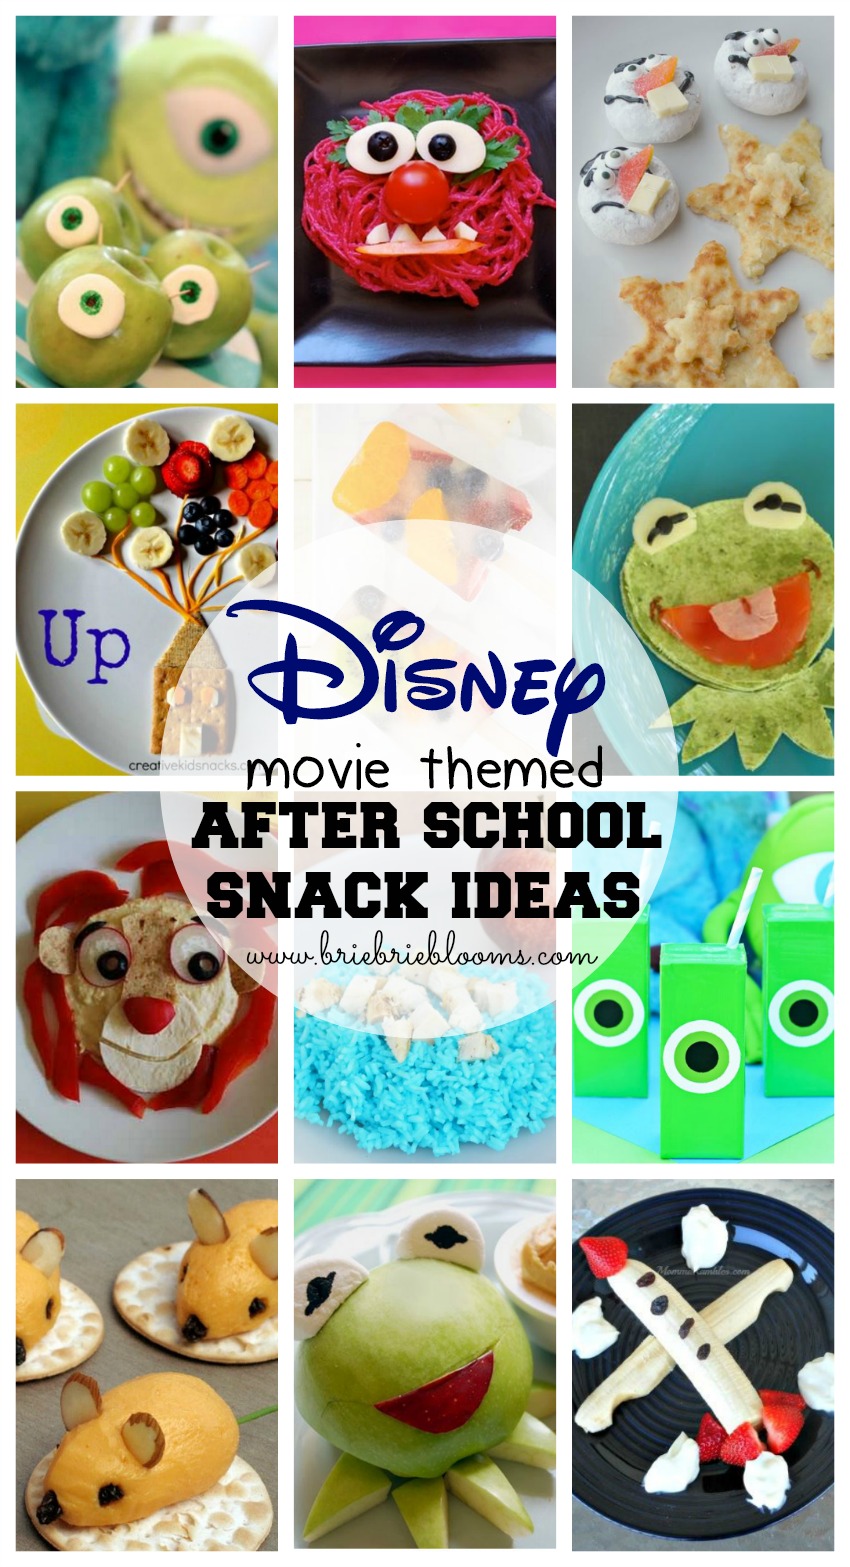 Disney-movie-themed-after-school-snack-ideas